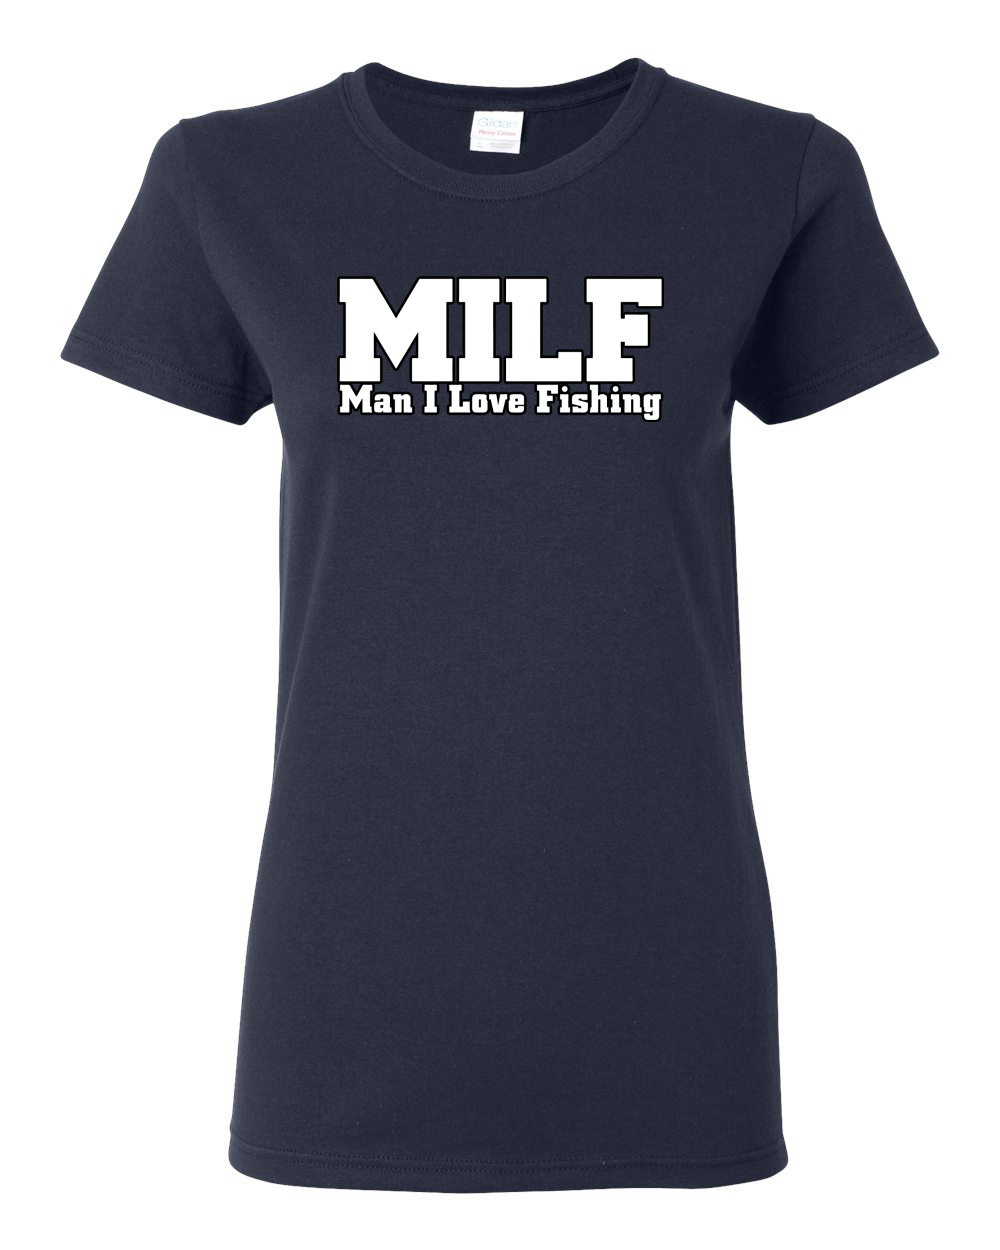 Milf Man I Love Fishing Fishing Tops T-Shirt Funny Novelty Womens tee TShirt 